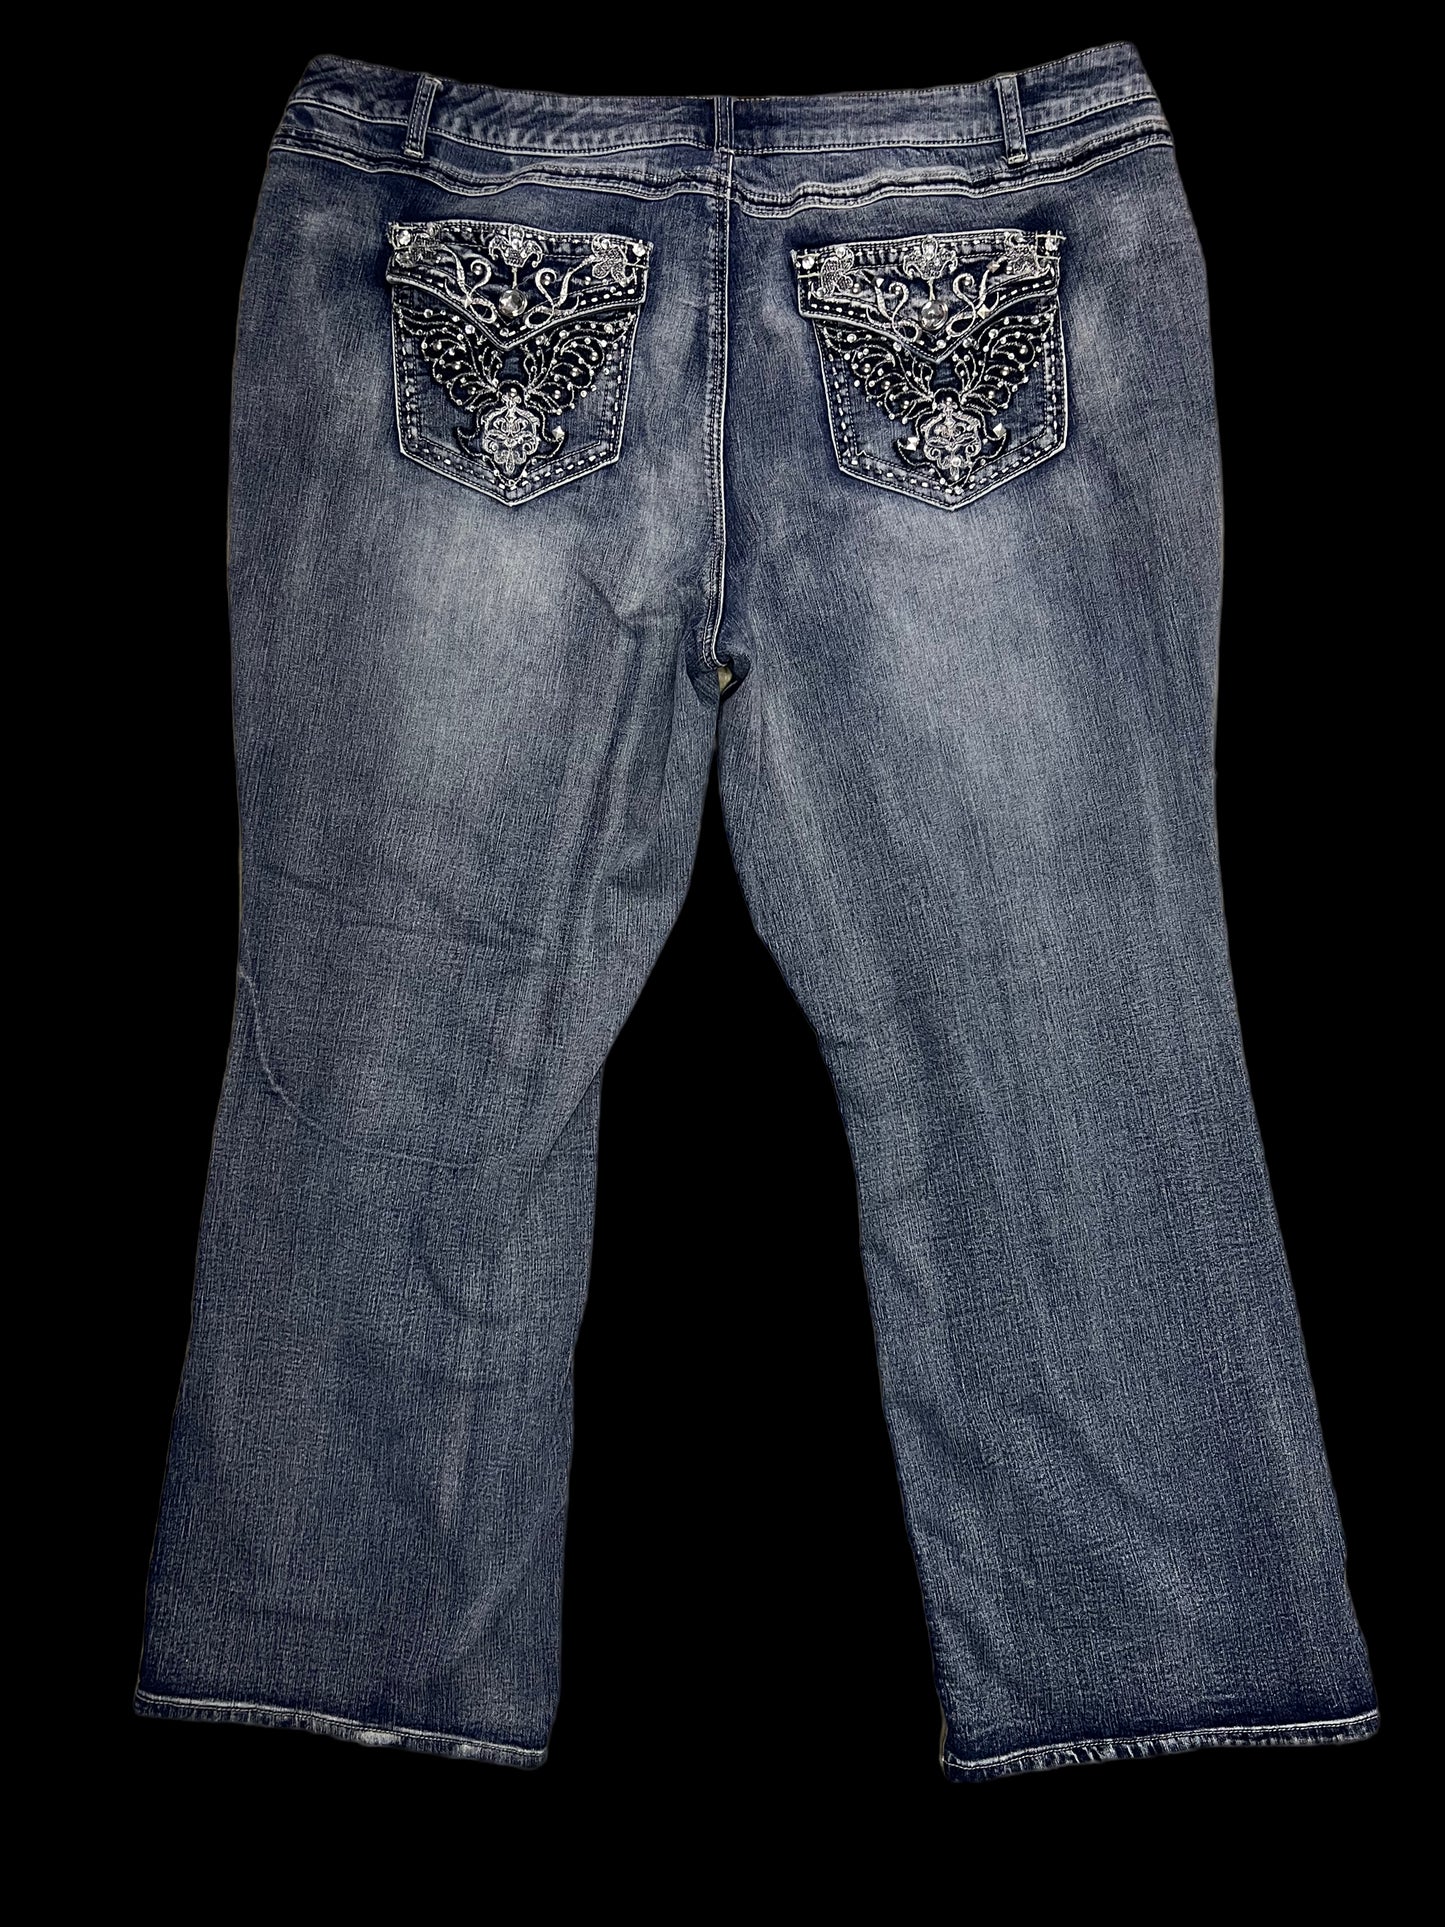 Plus-size embellished jeans